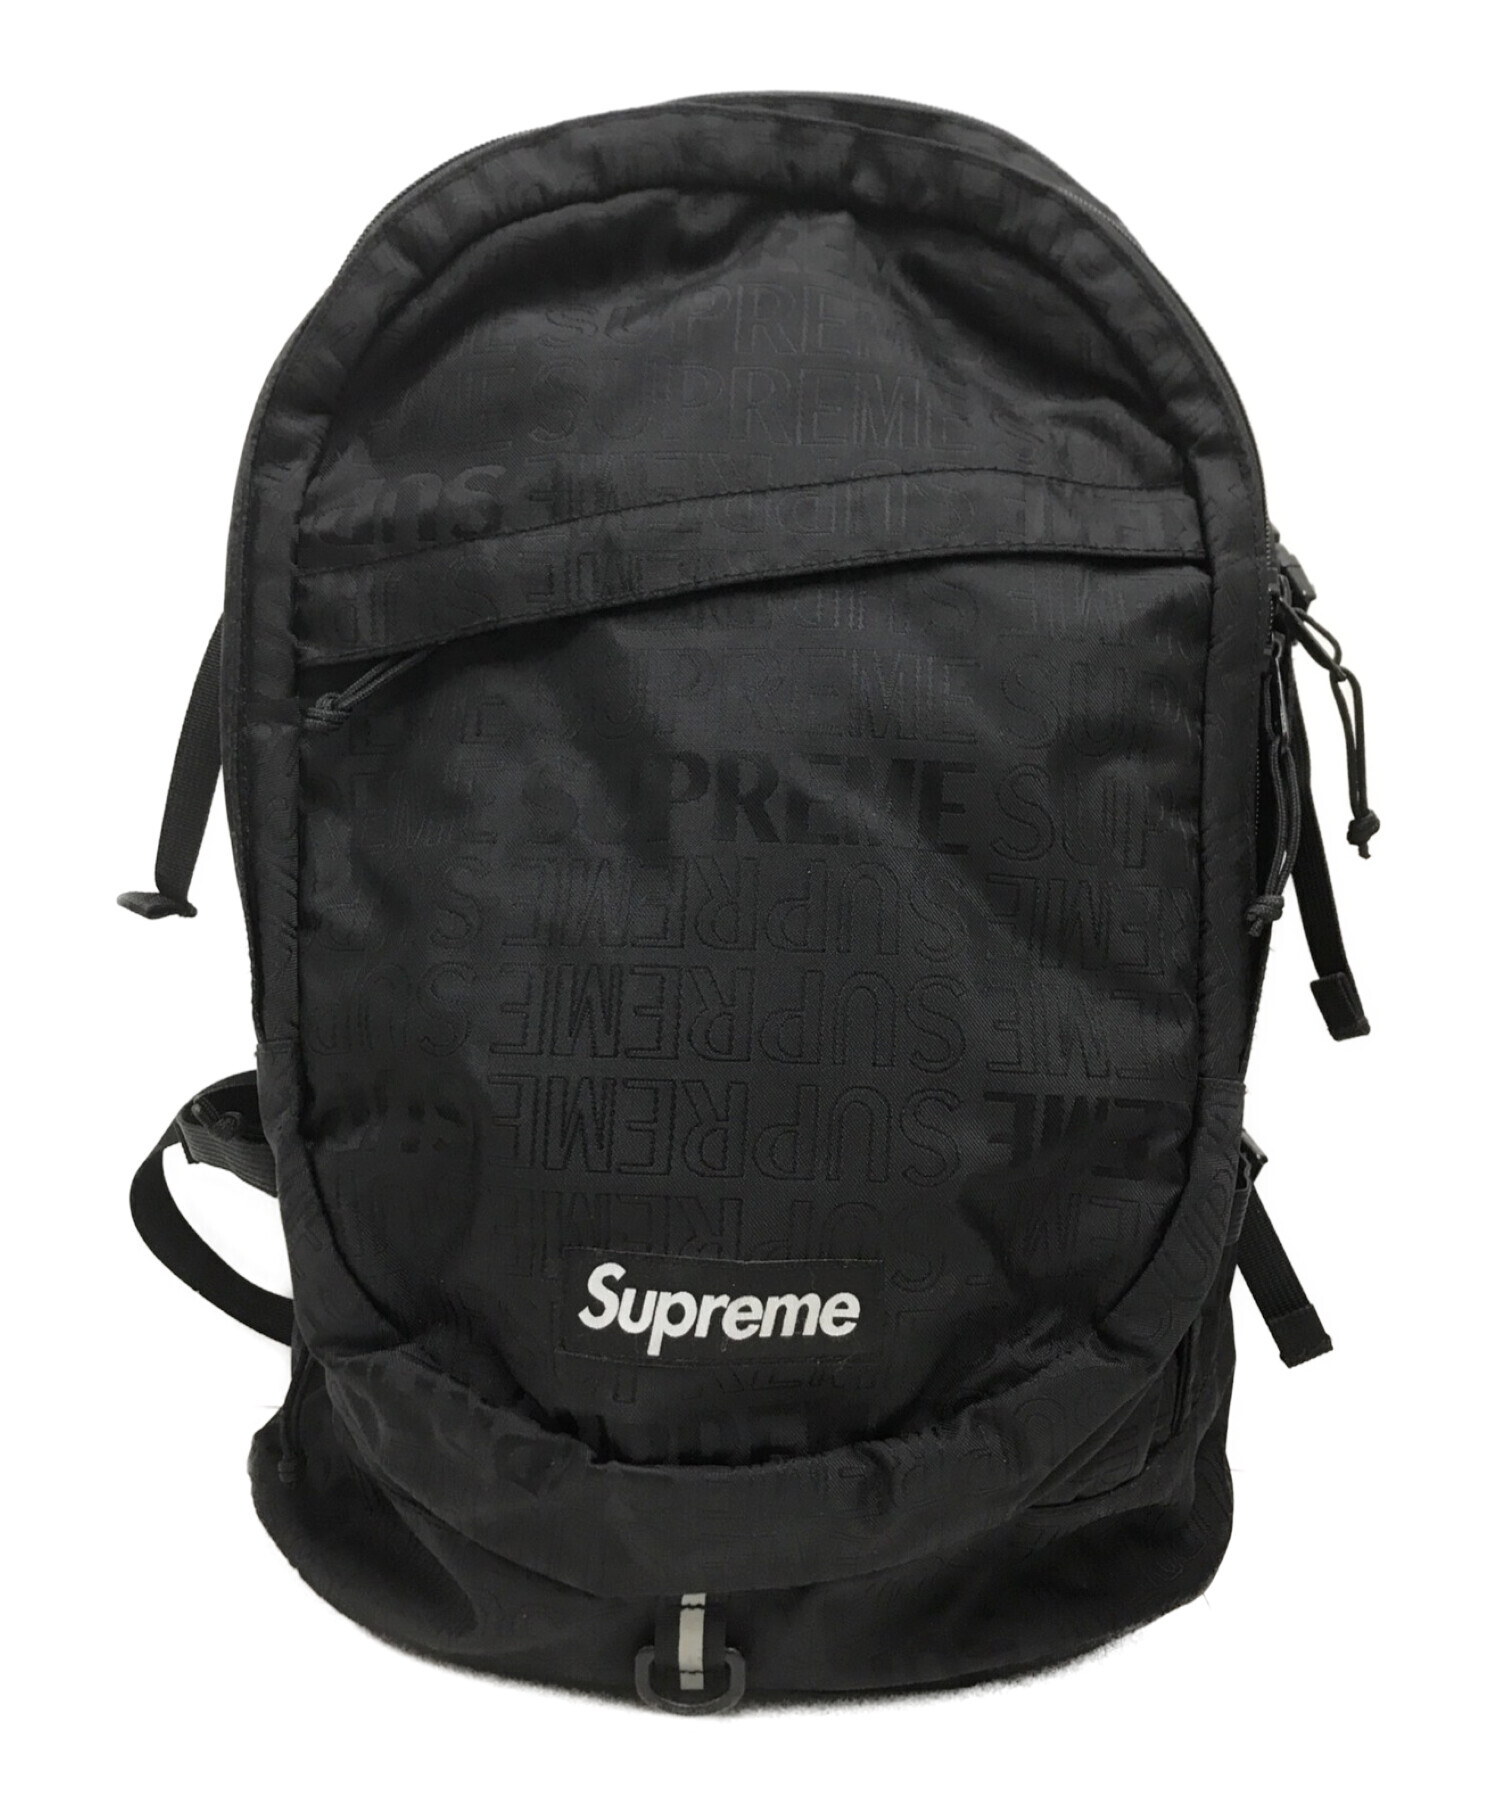 Supreme backpack 19ss